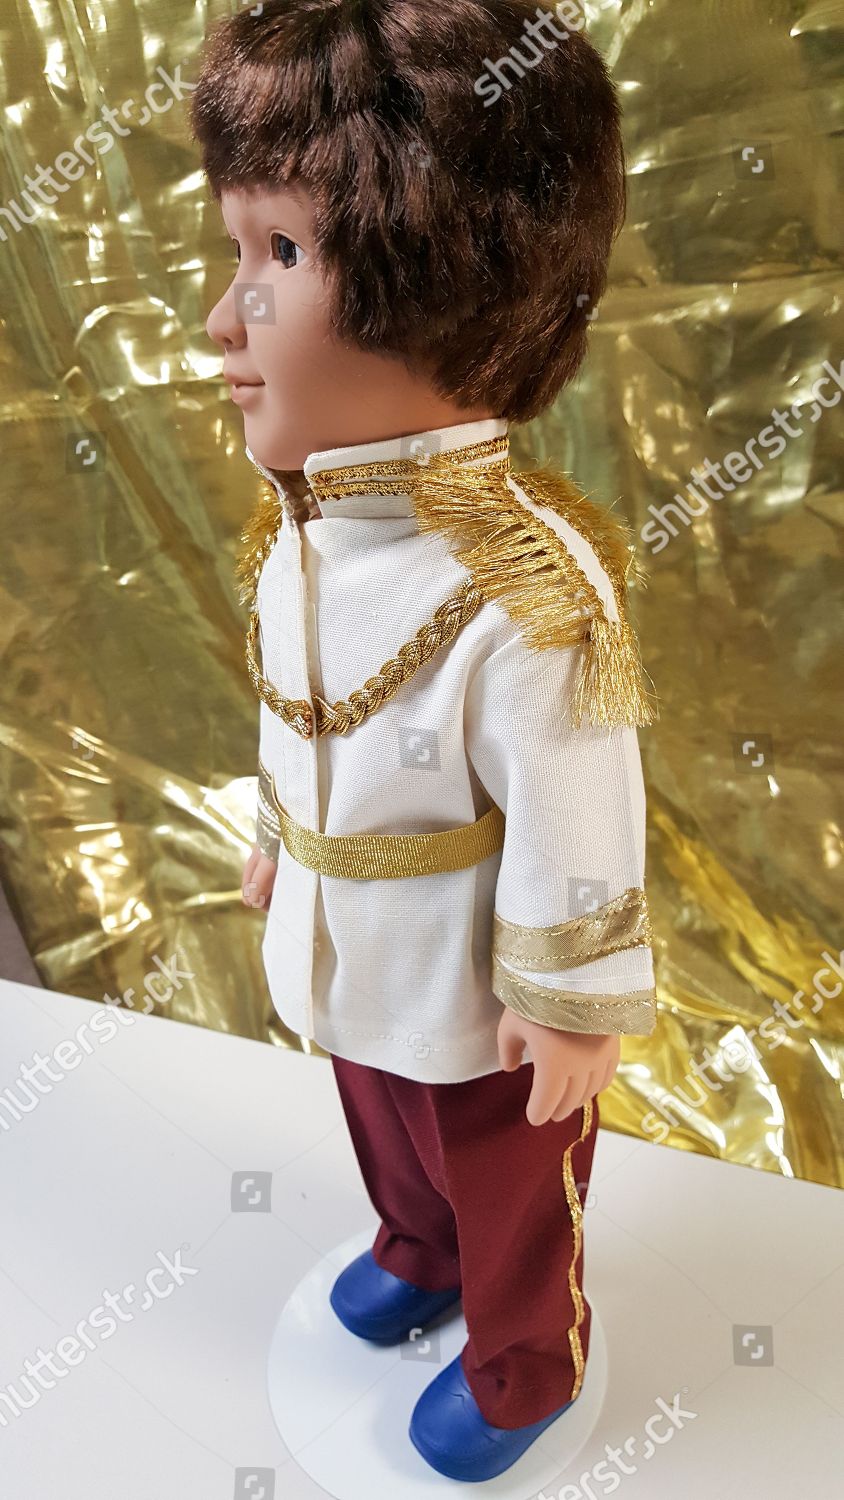 prince harry doll